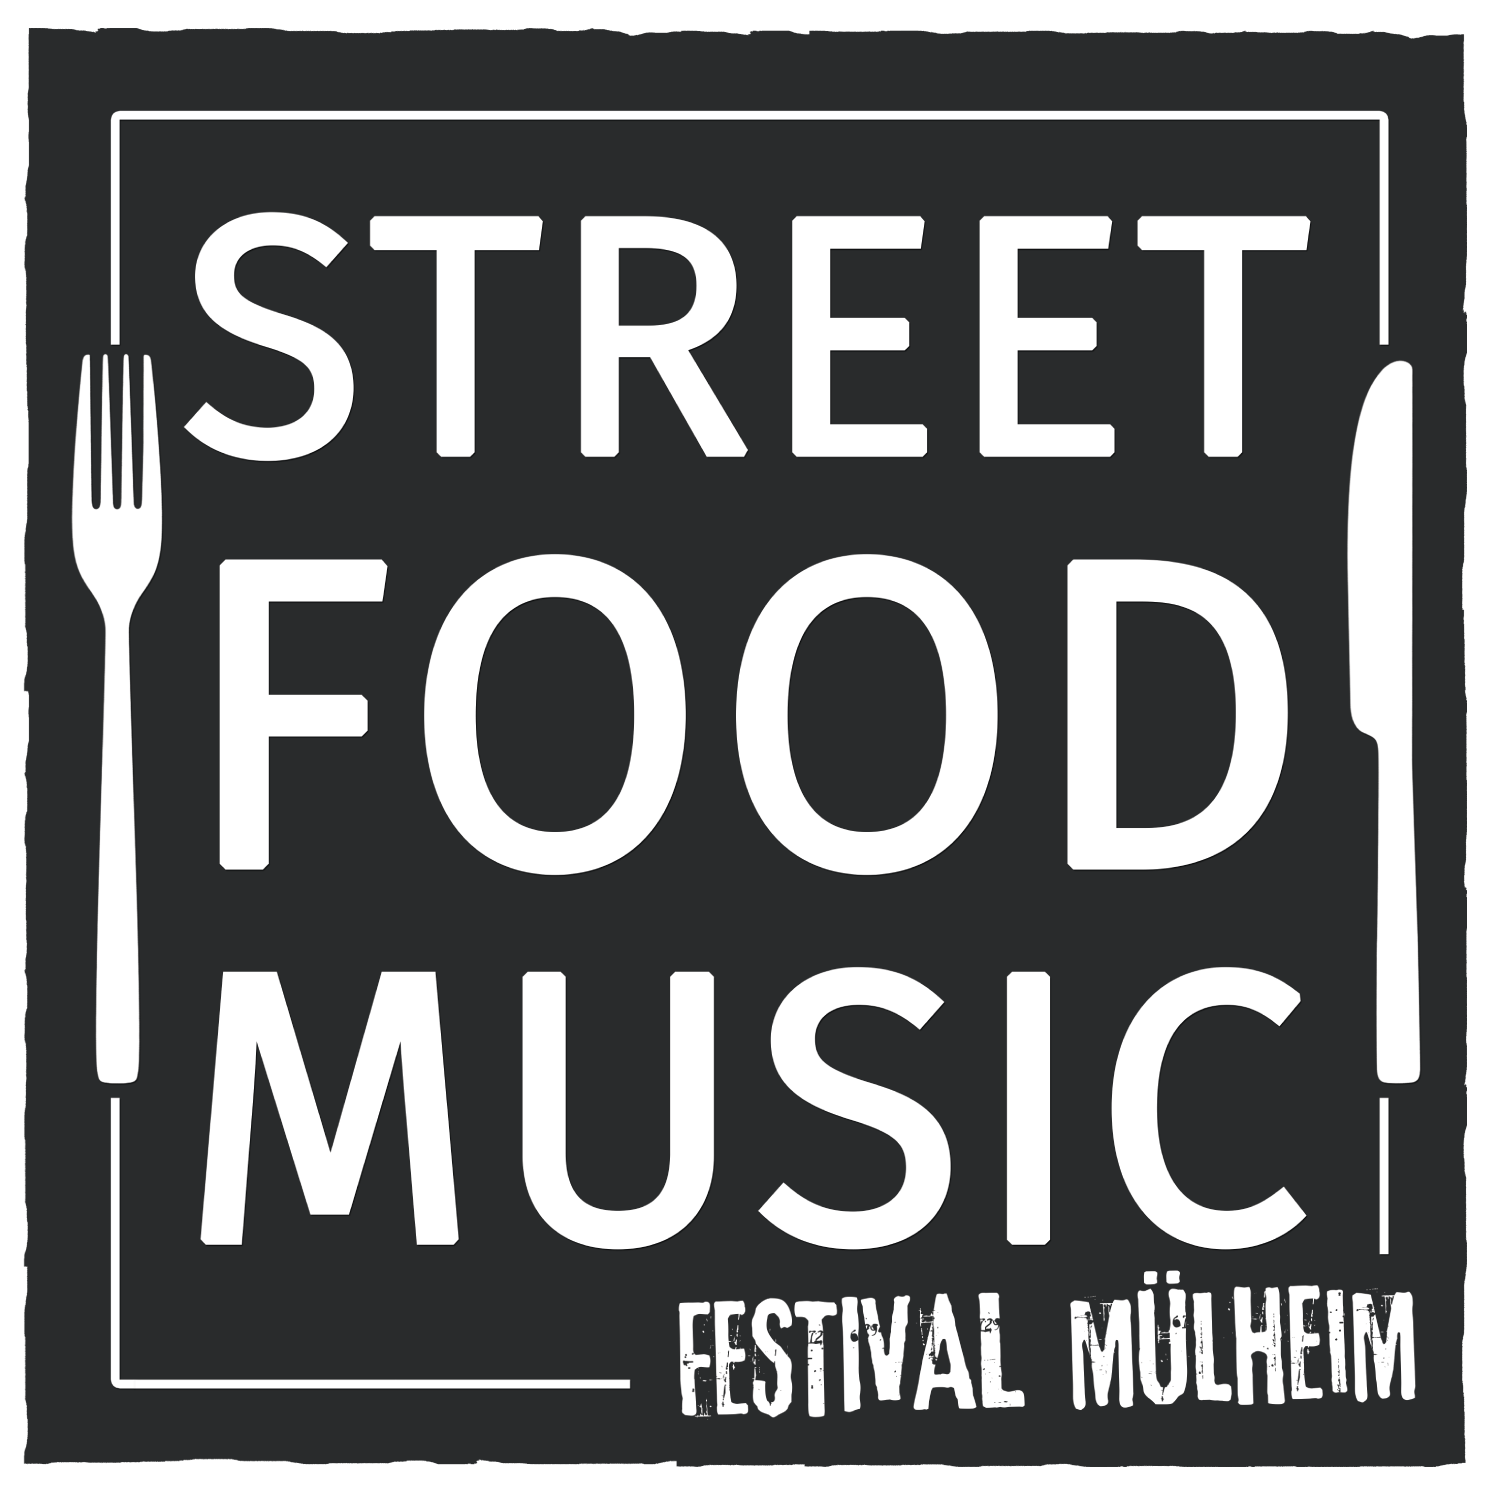 Street Food & Music Festival Mülheim